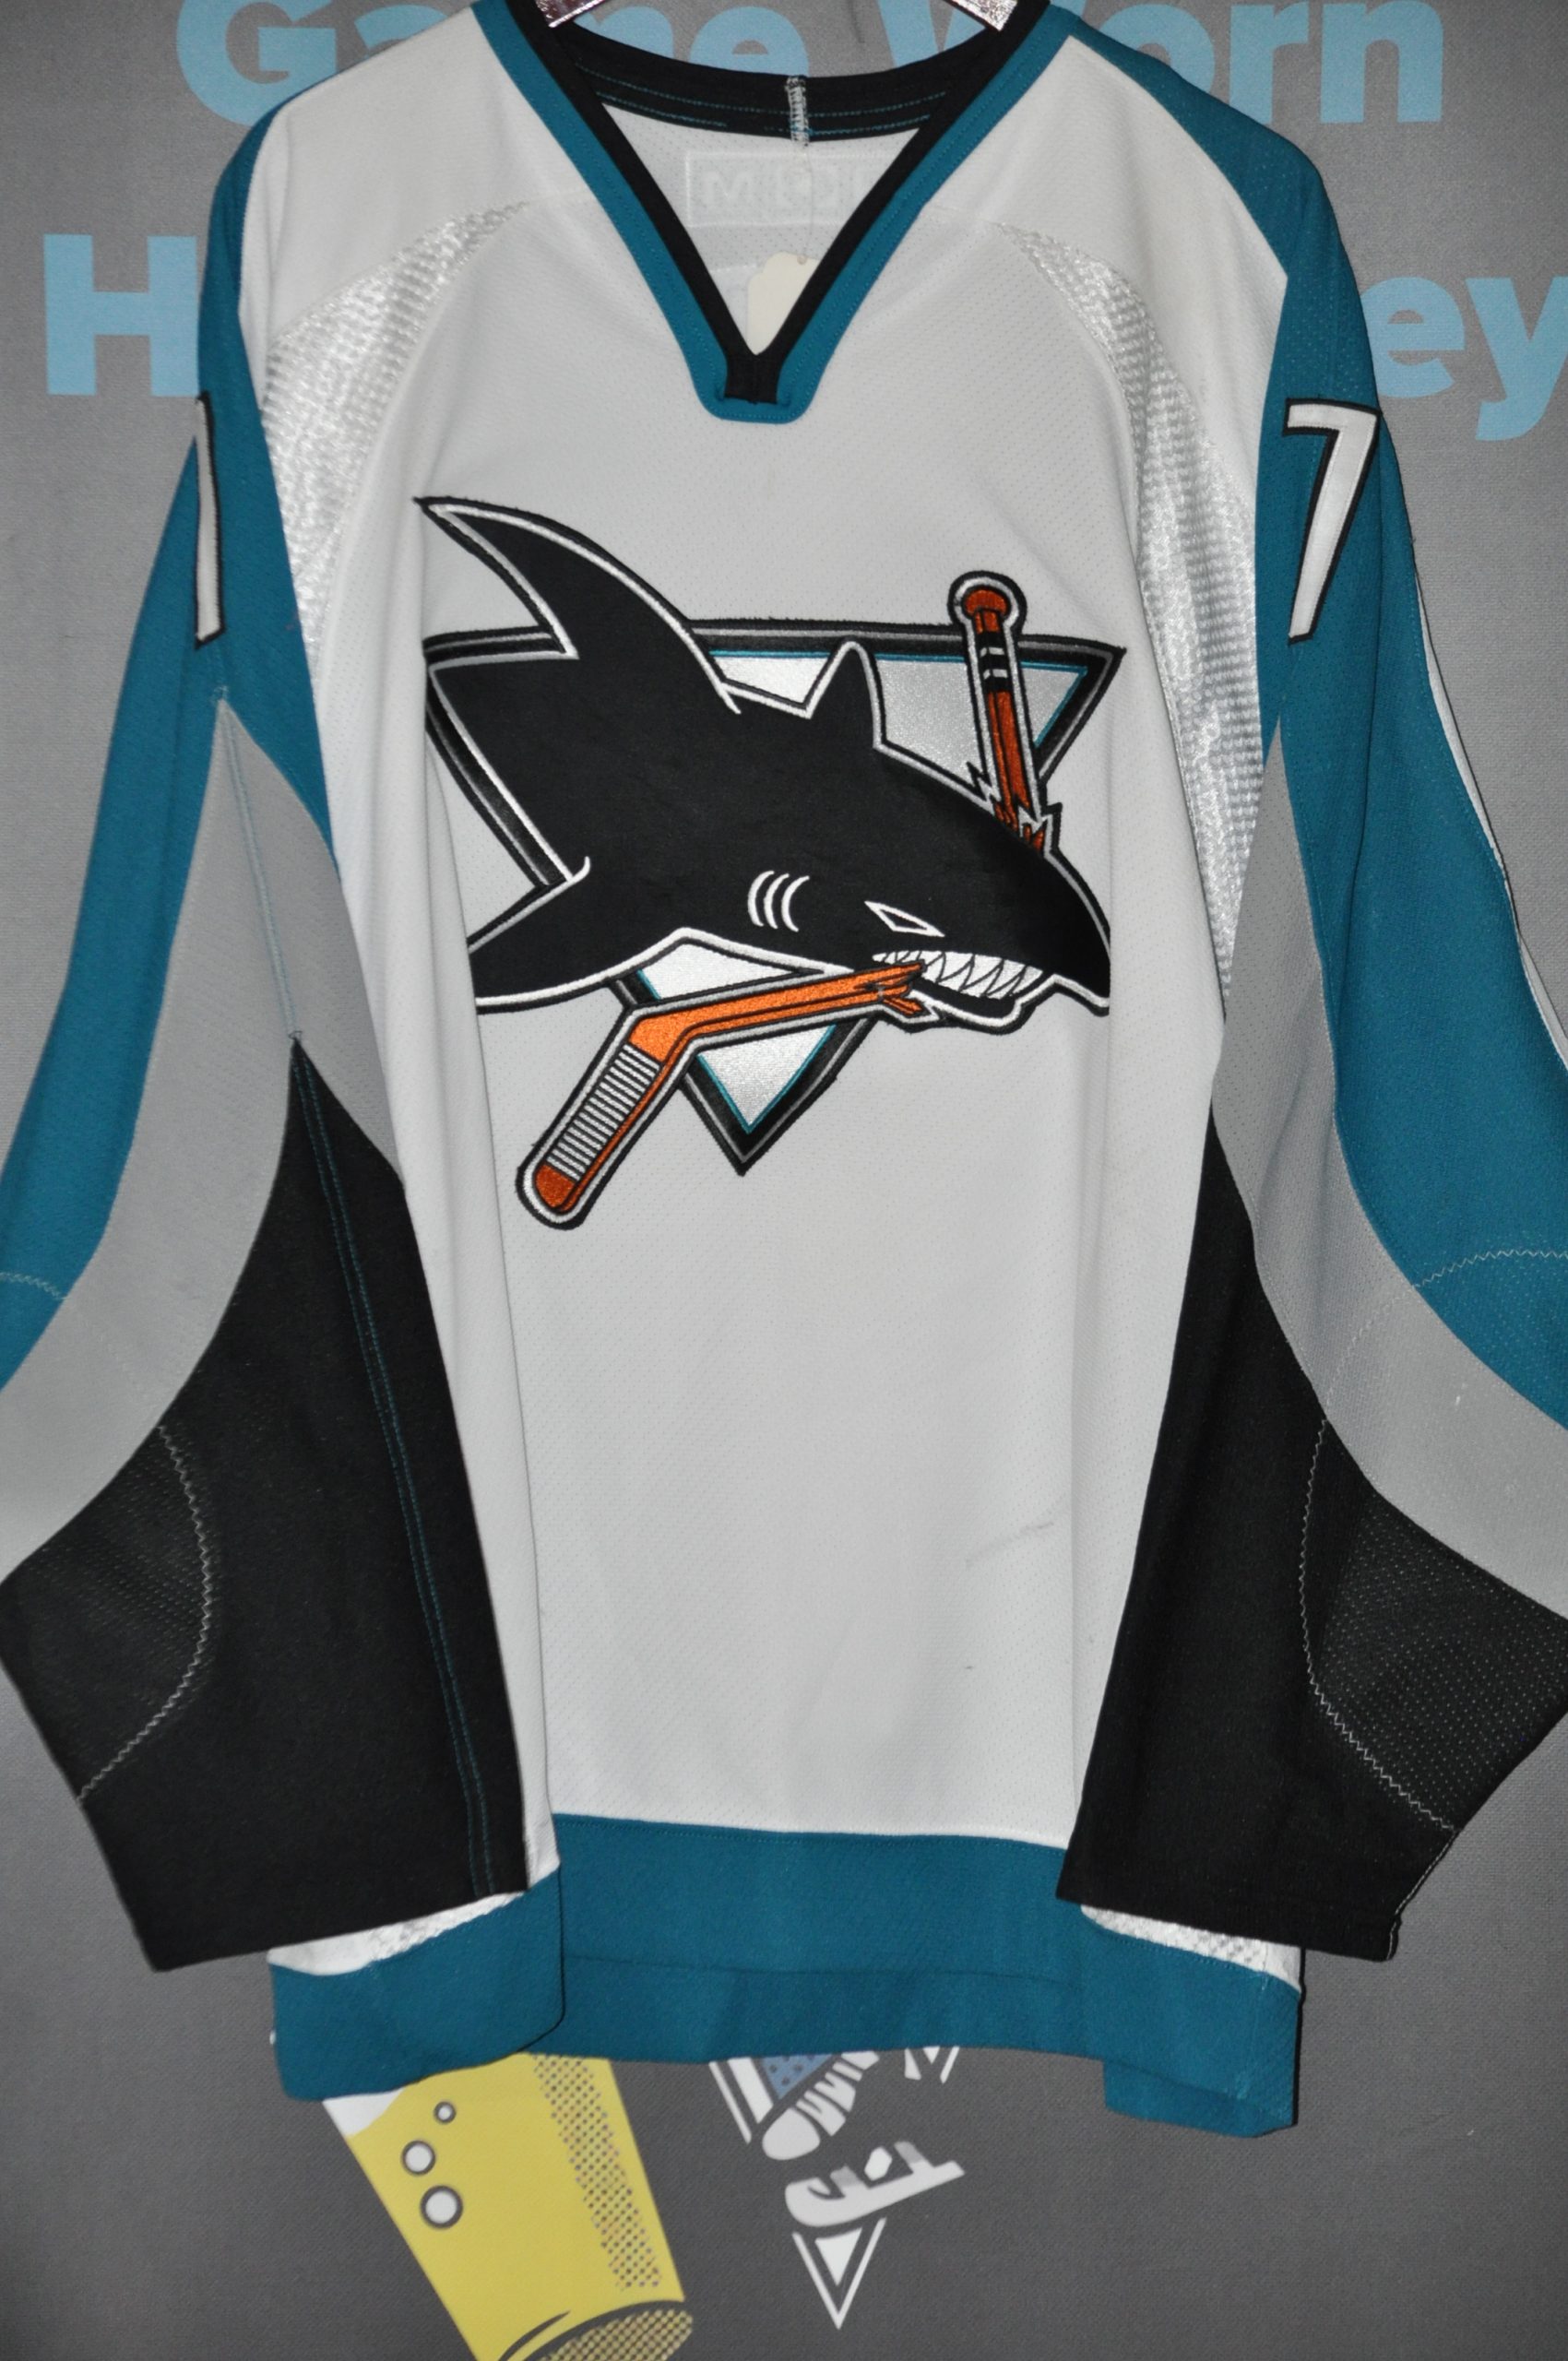 2003-04 San Jose Sharks Brad Stuart. – Hockey Jersey